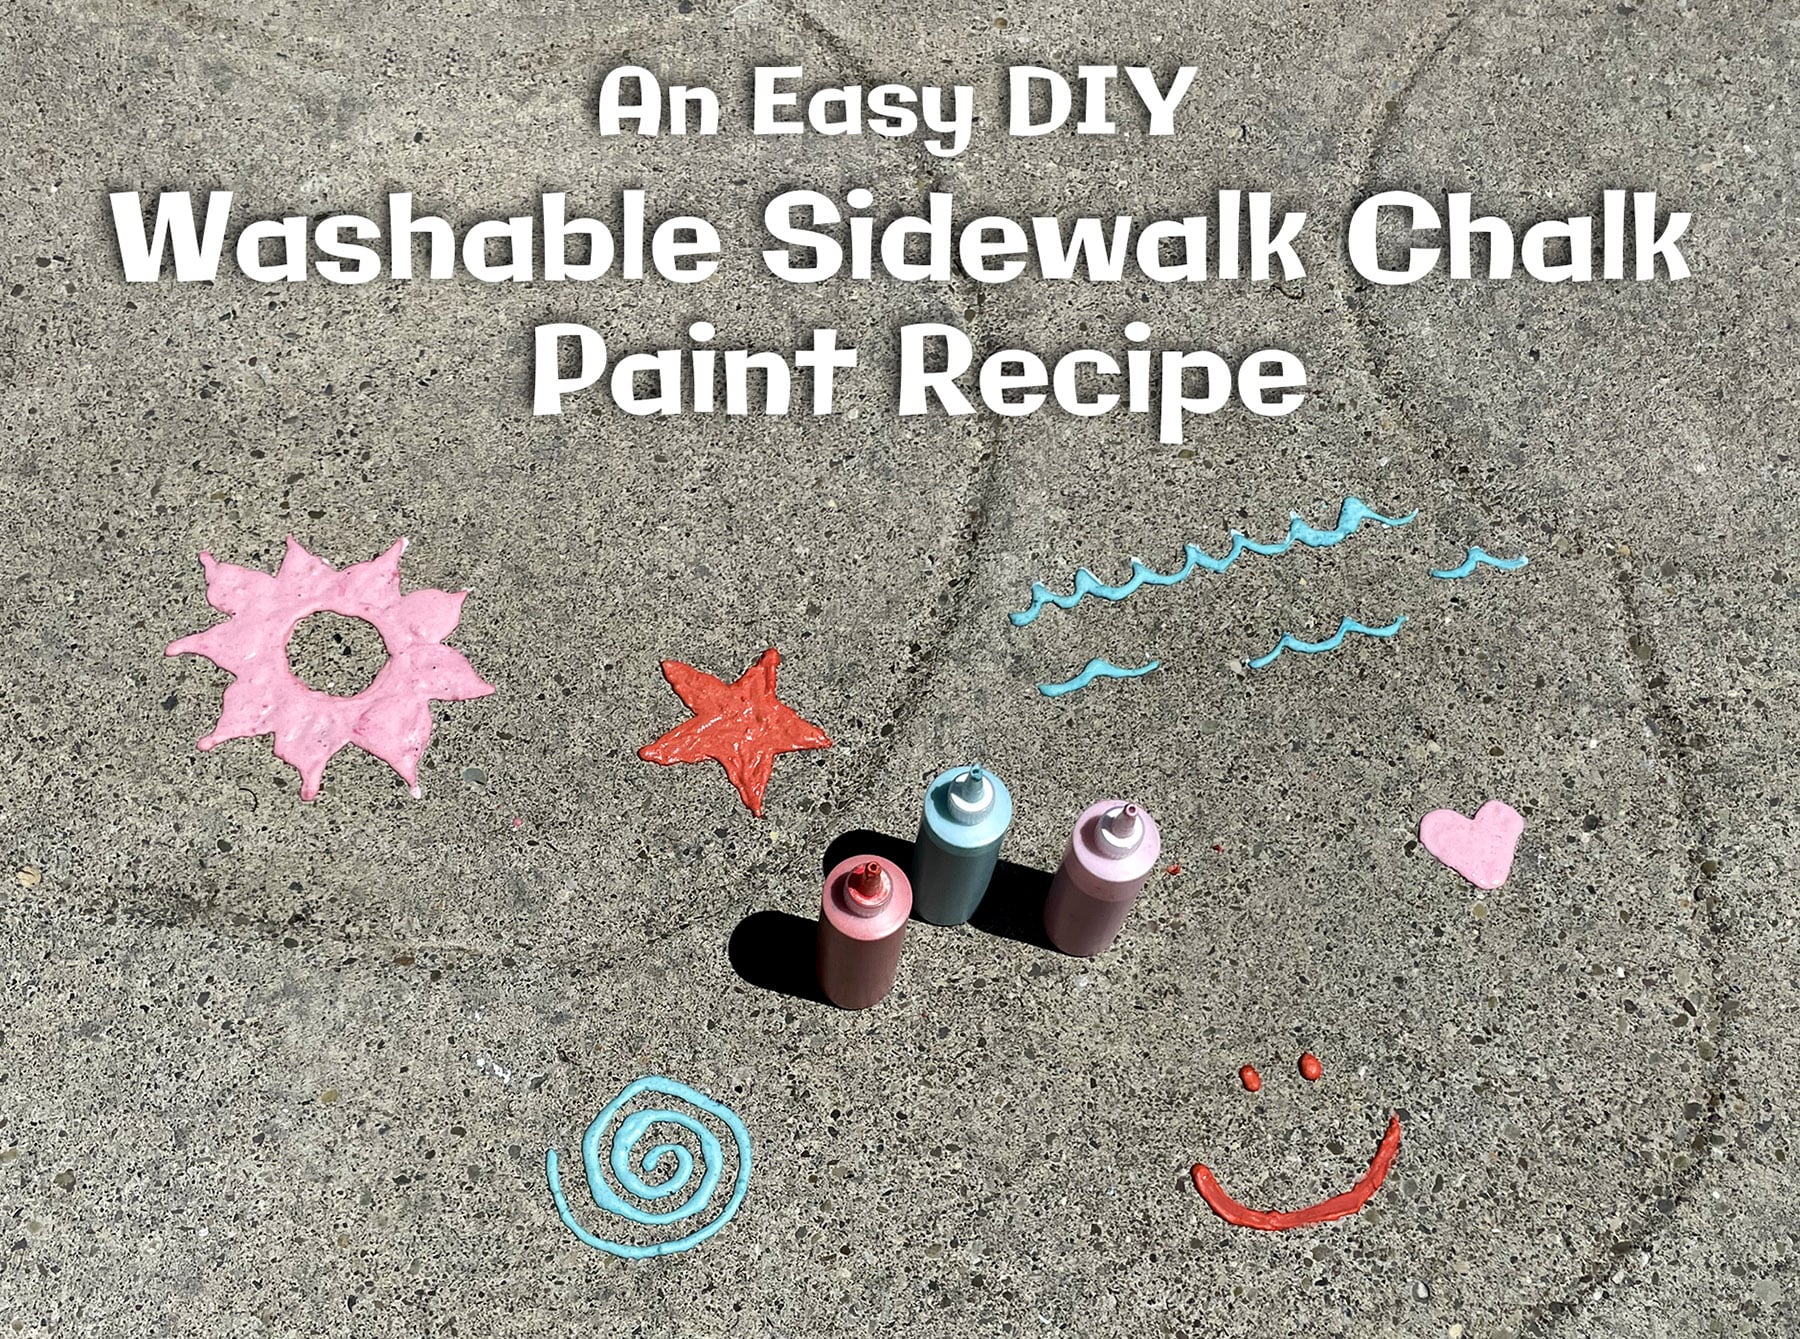 Puffy Sidewalk Chalk Paint Recipe for Kids 